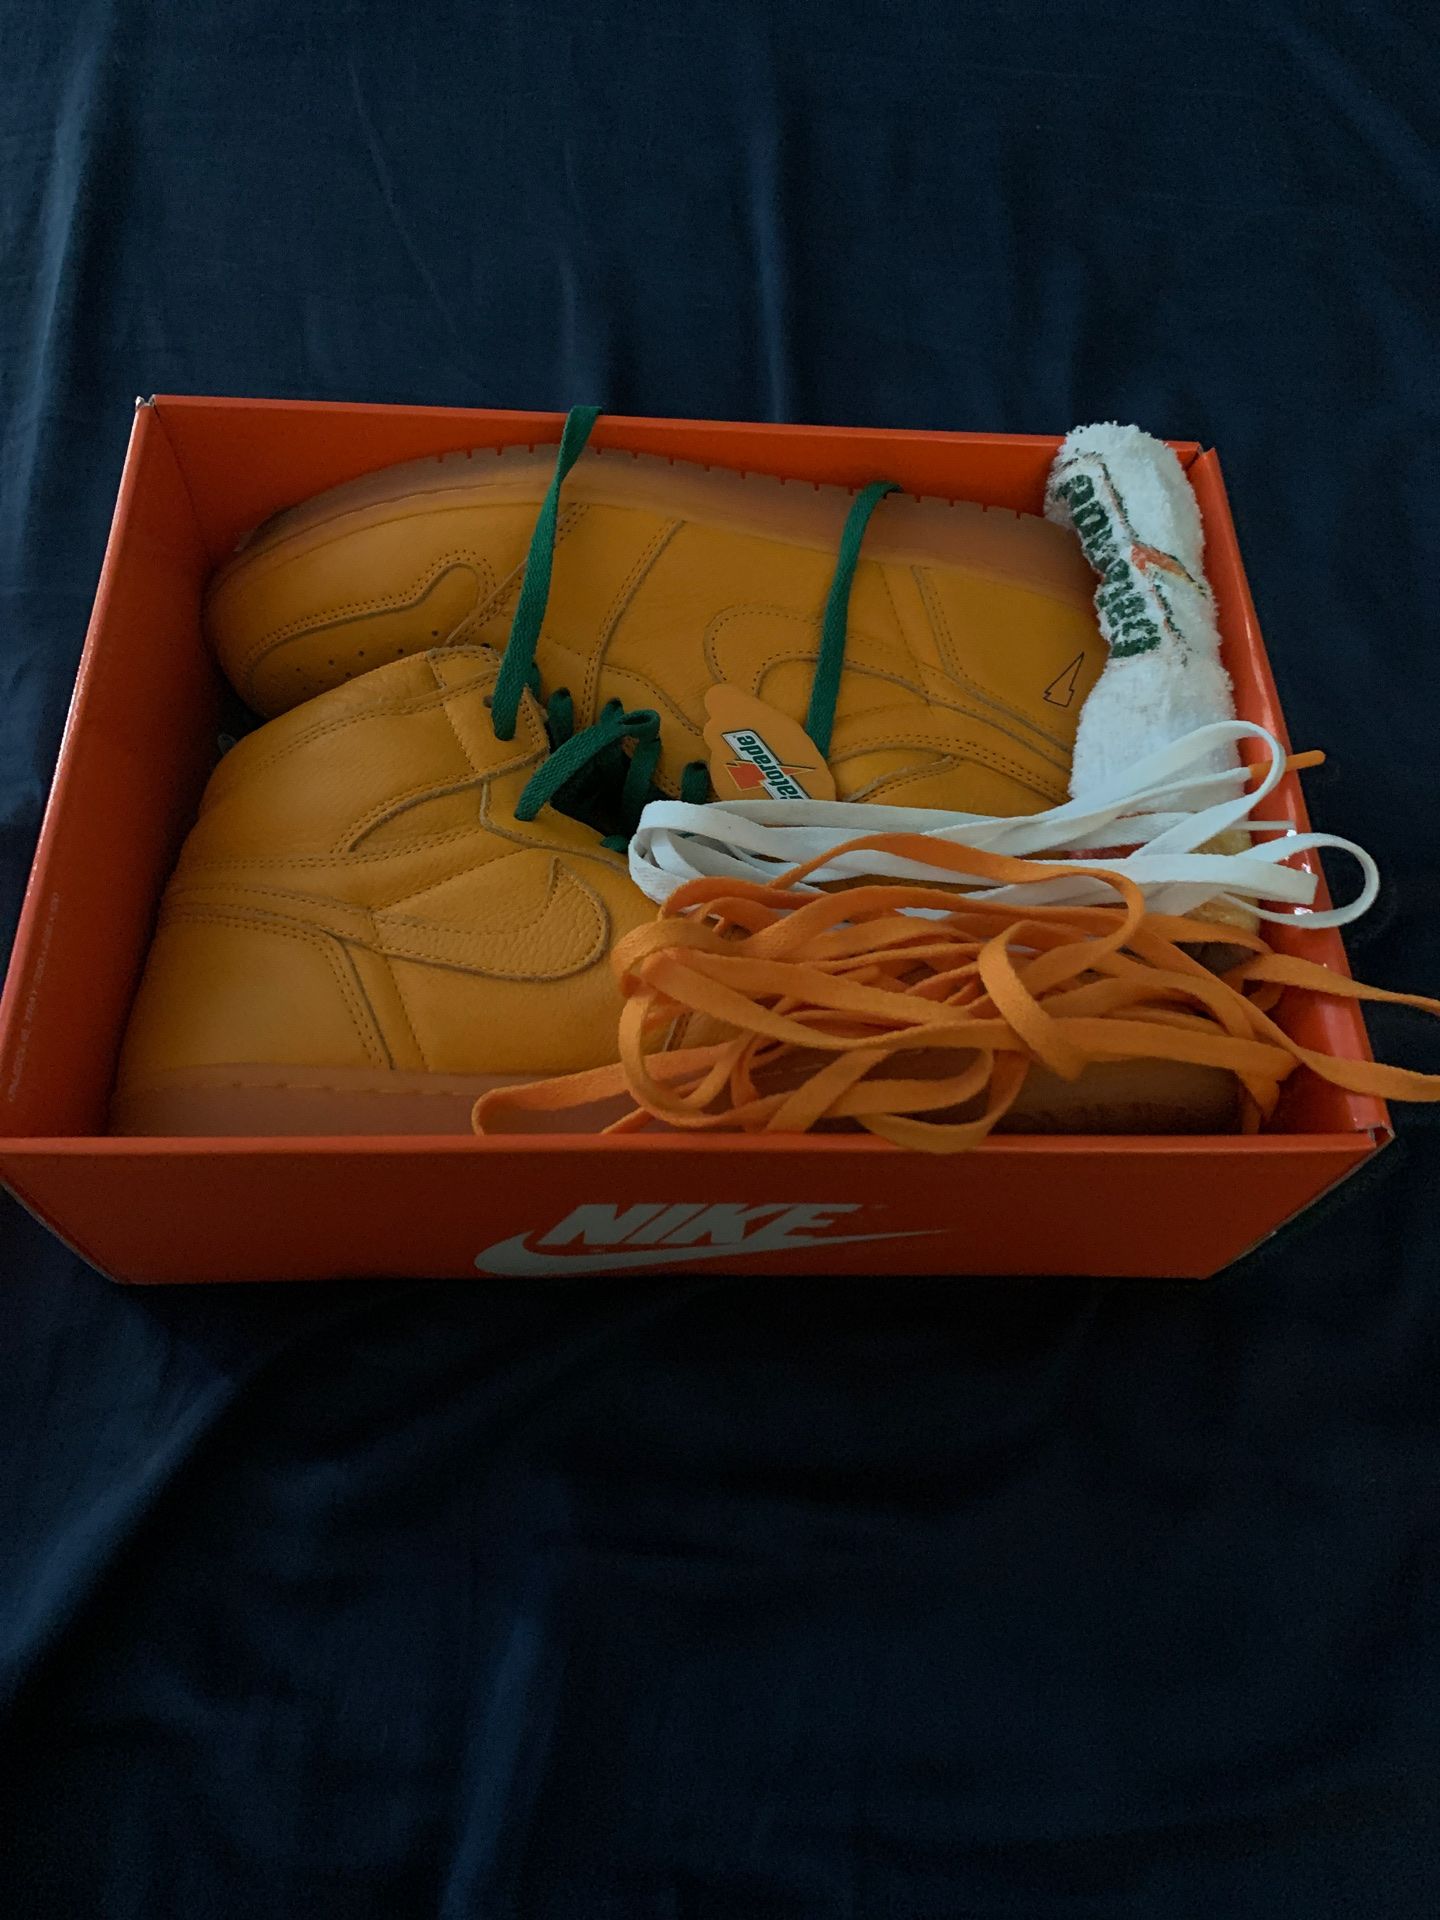 Air Jordan retro 1 orange Gatorade Size 12